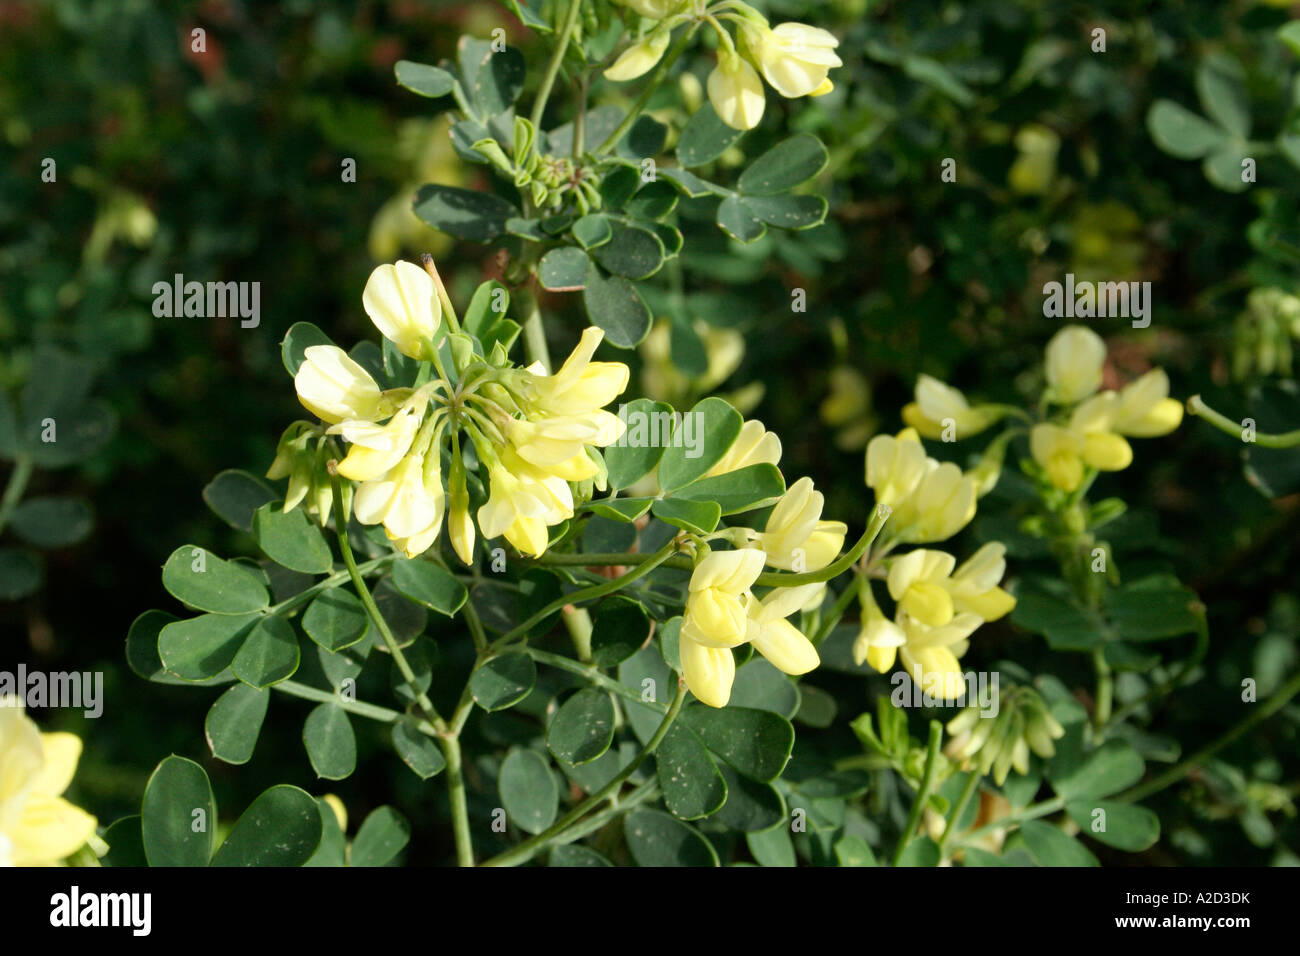 Coronilla velentina glauca citrina in full flower during midwinter Stock Photo